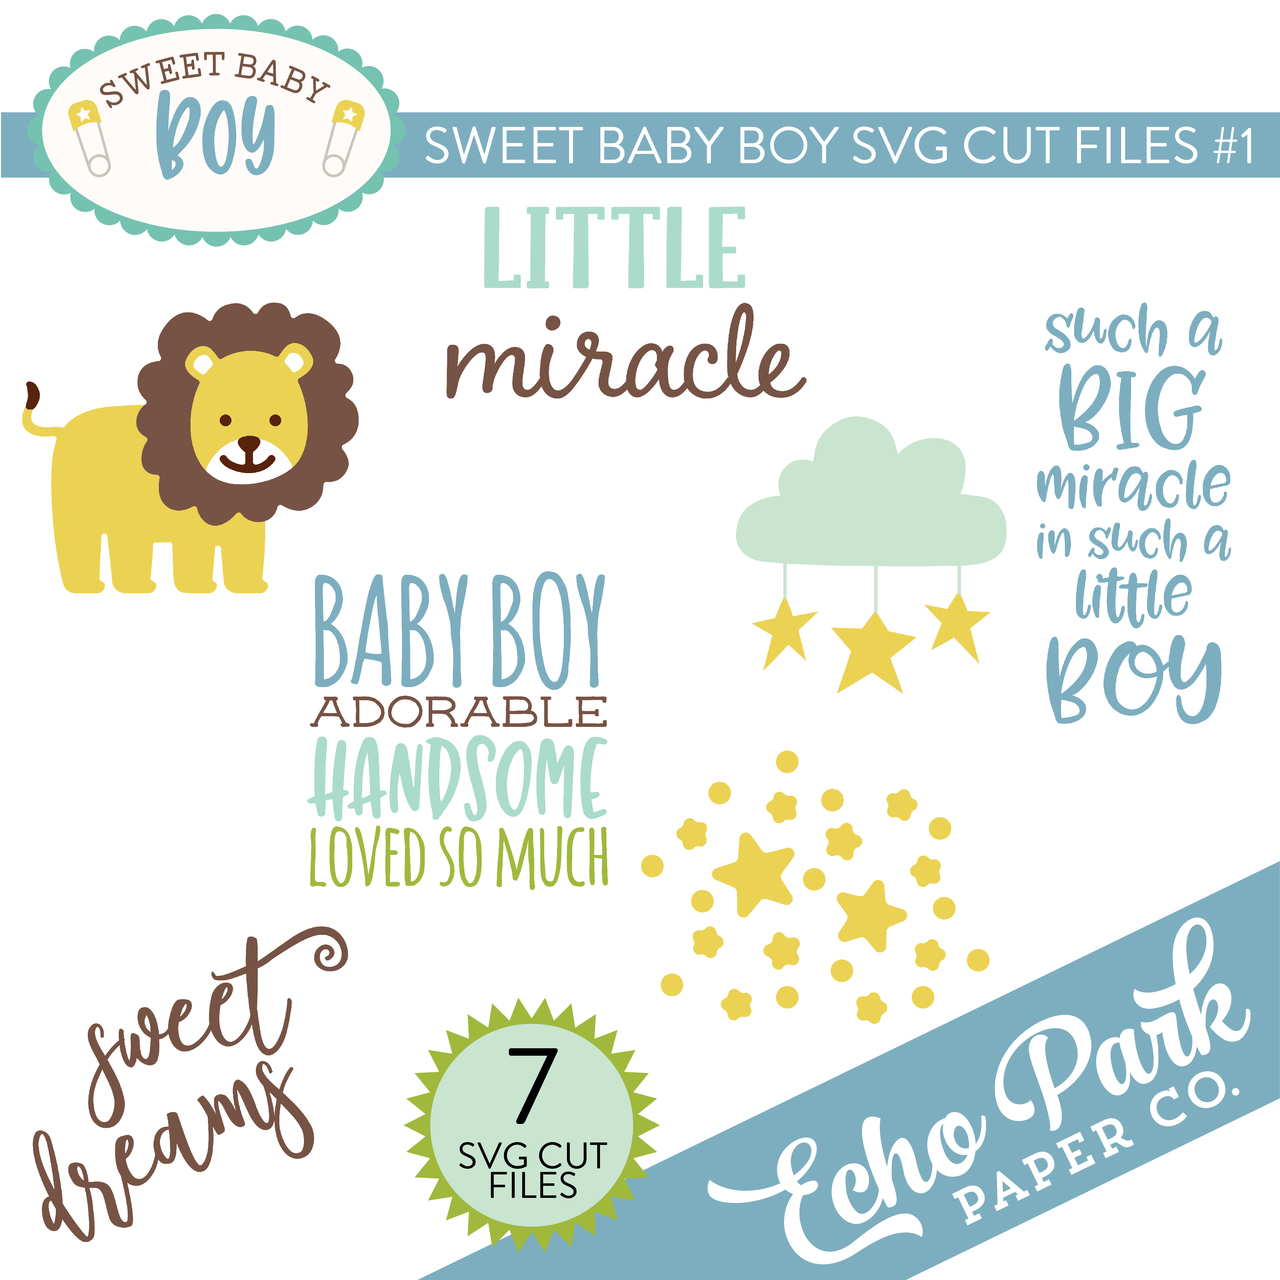 Sweet Baby Boy SVG Cut Files #1